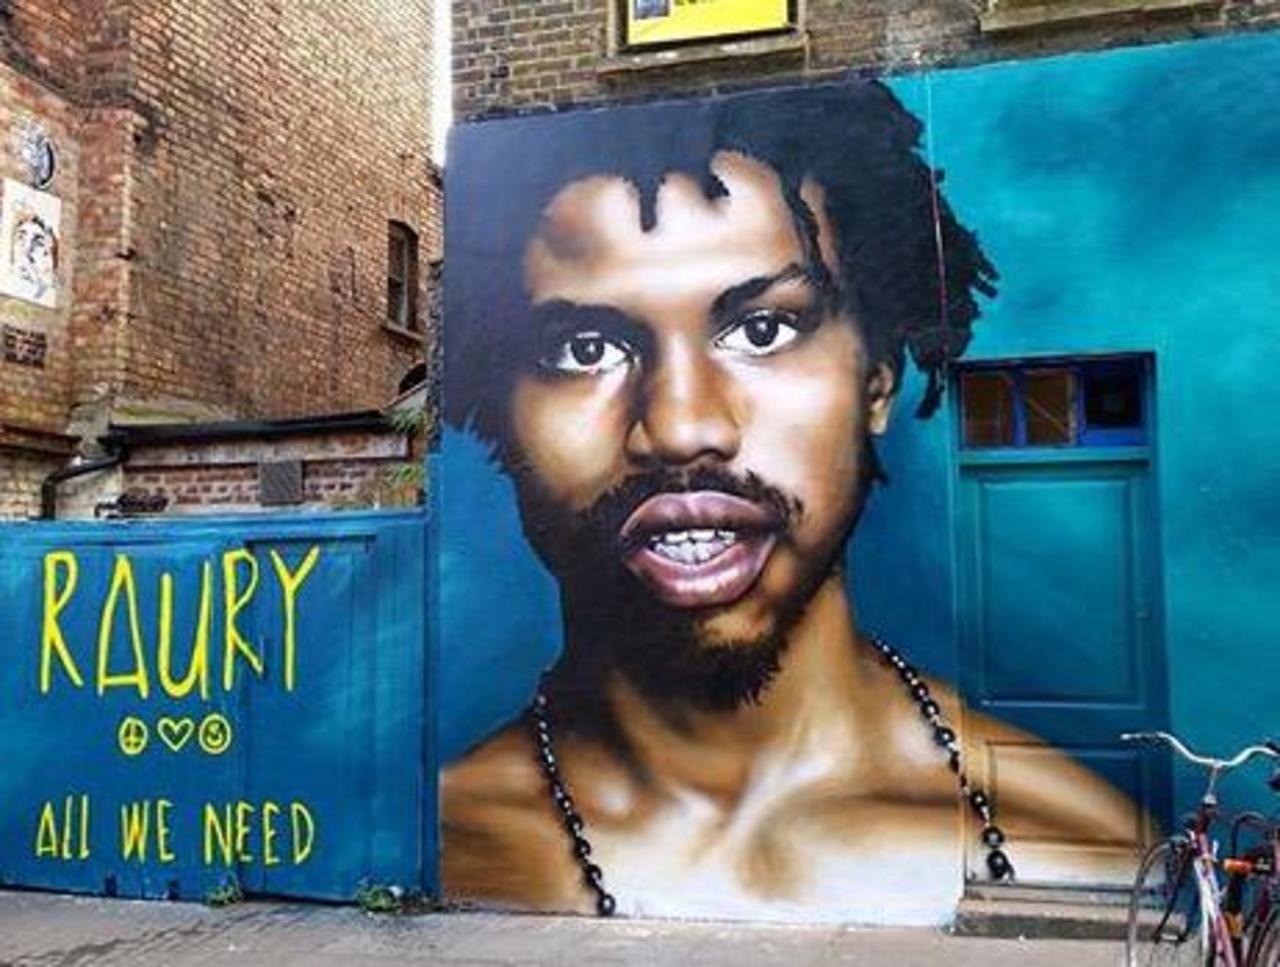 New Street Art of Raury by Olliver Switch in Brick Lane 

#art #graffiti #mural #streetart http://t.co/9Lfw6efLMB